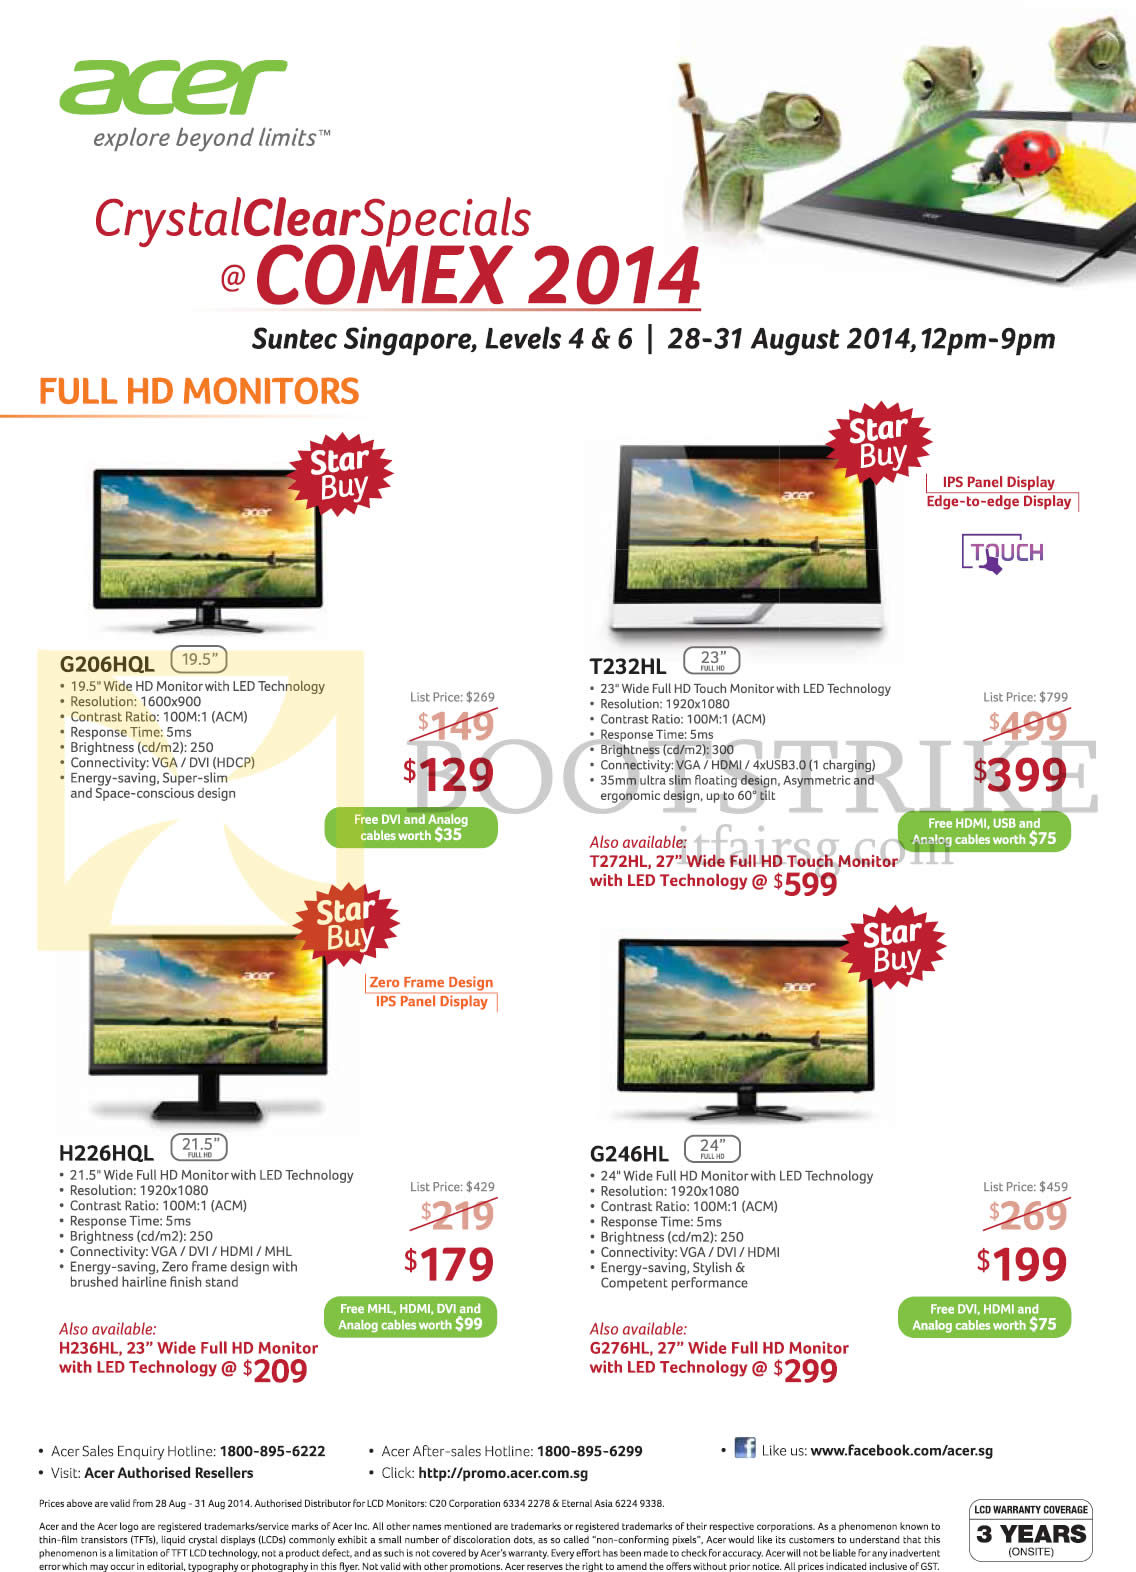 COMEX 2014 price list image brochure of Acer Monitors G206HQL, T232HL, H226HQL, G246HL